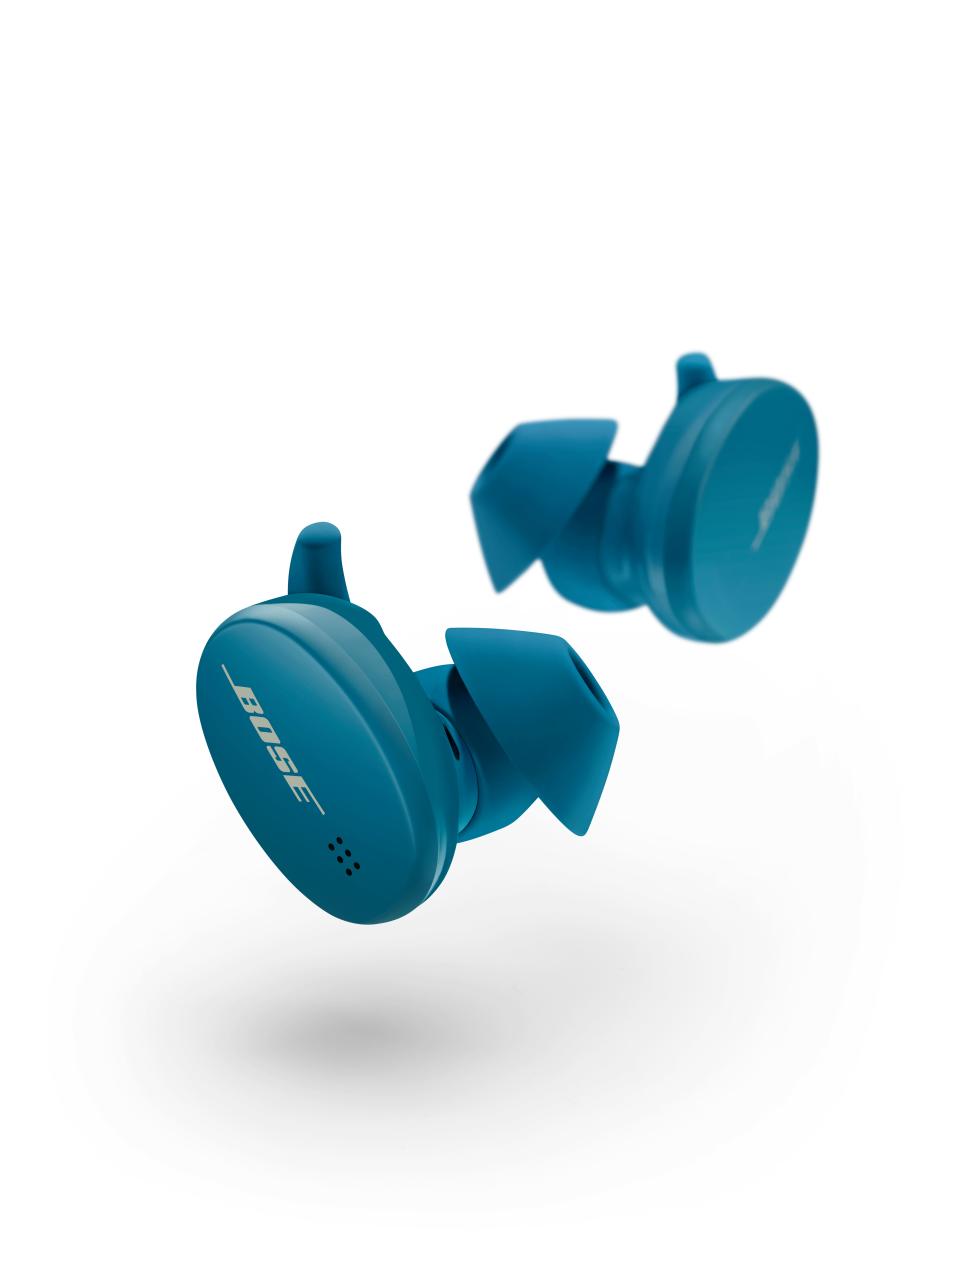 Bose Sport Earbuds in Baltic Blue, $199